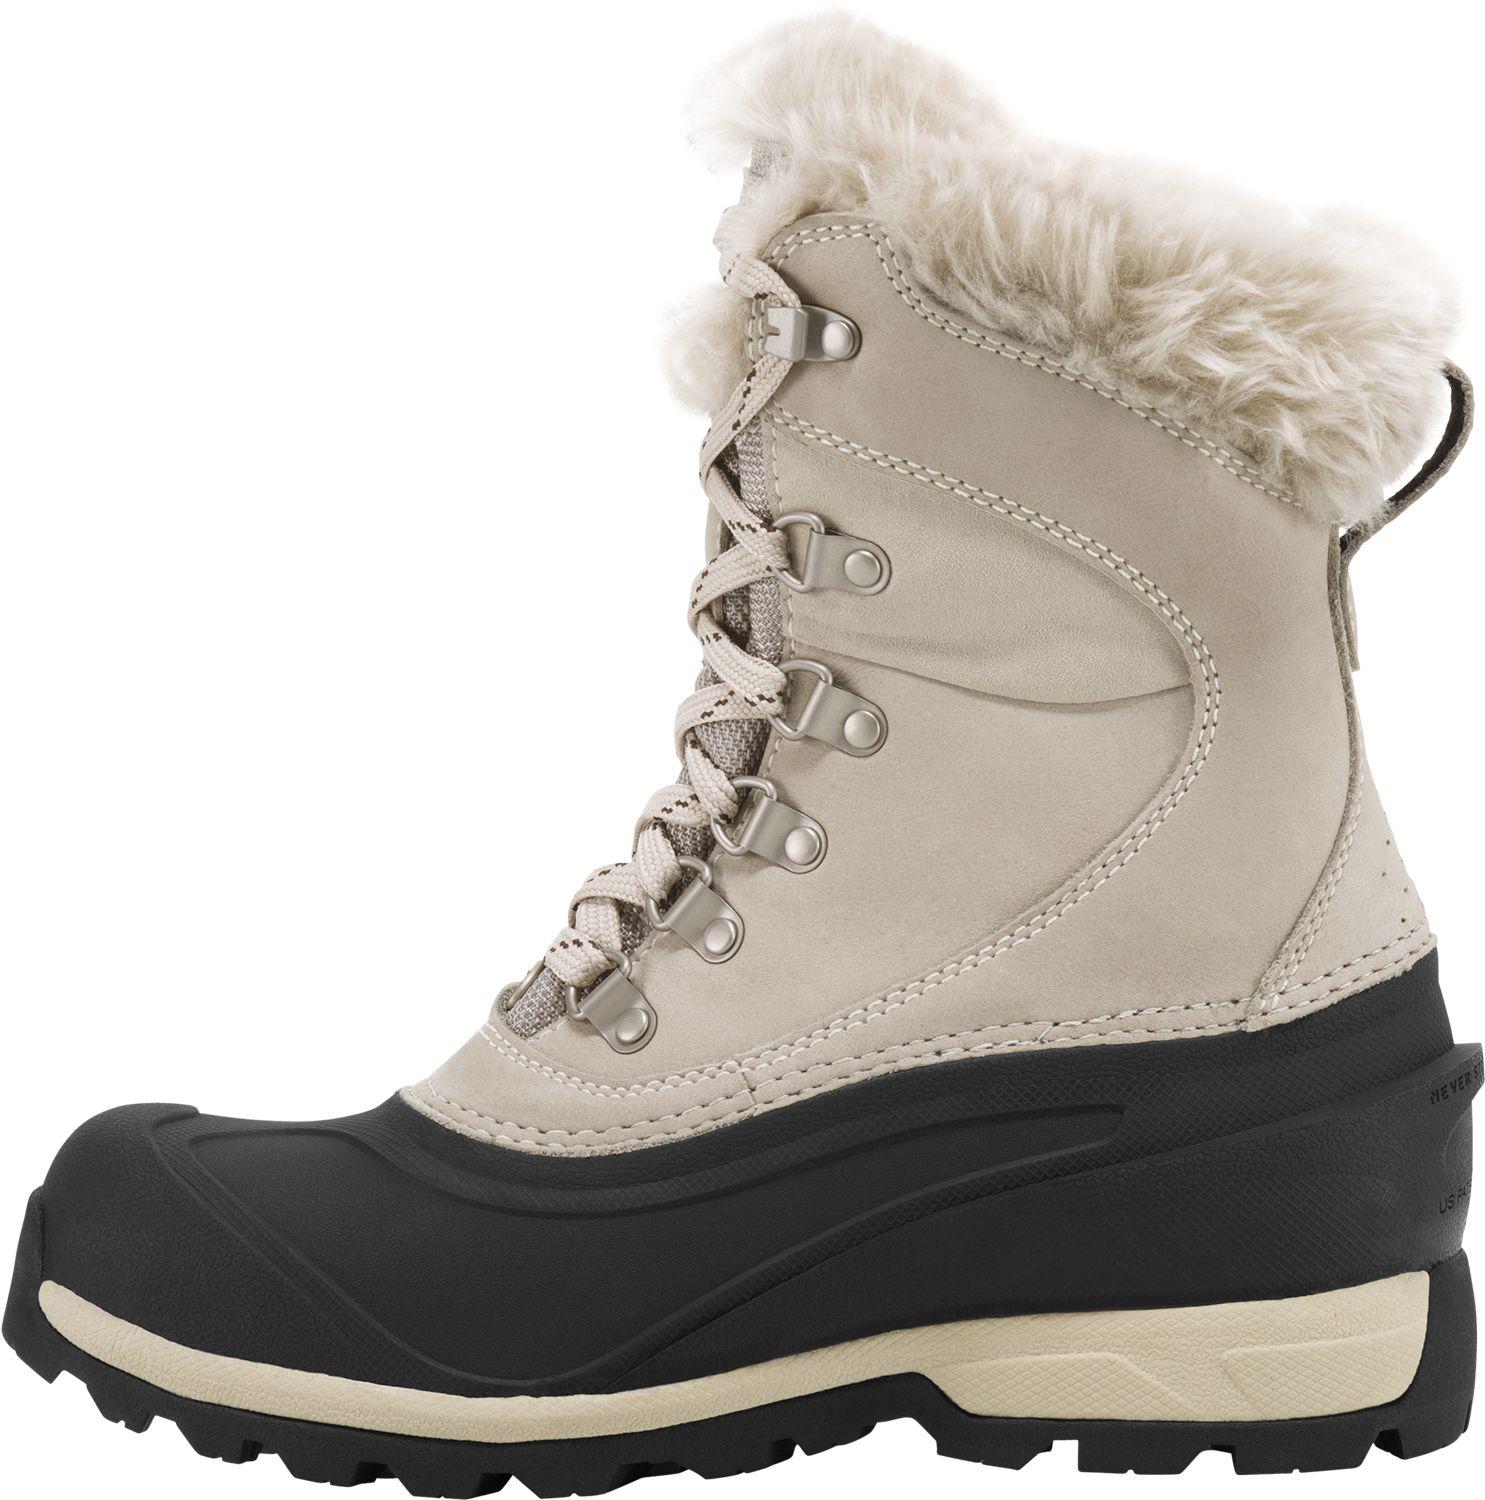 chilkat boots womens